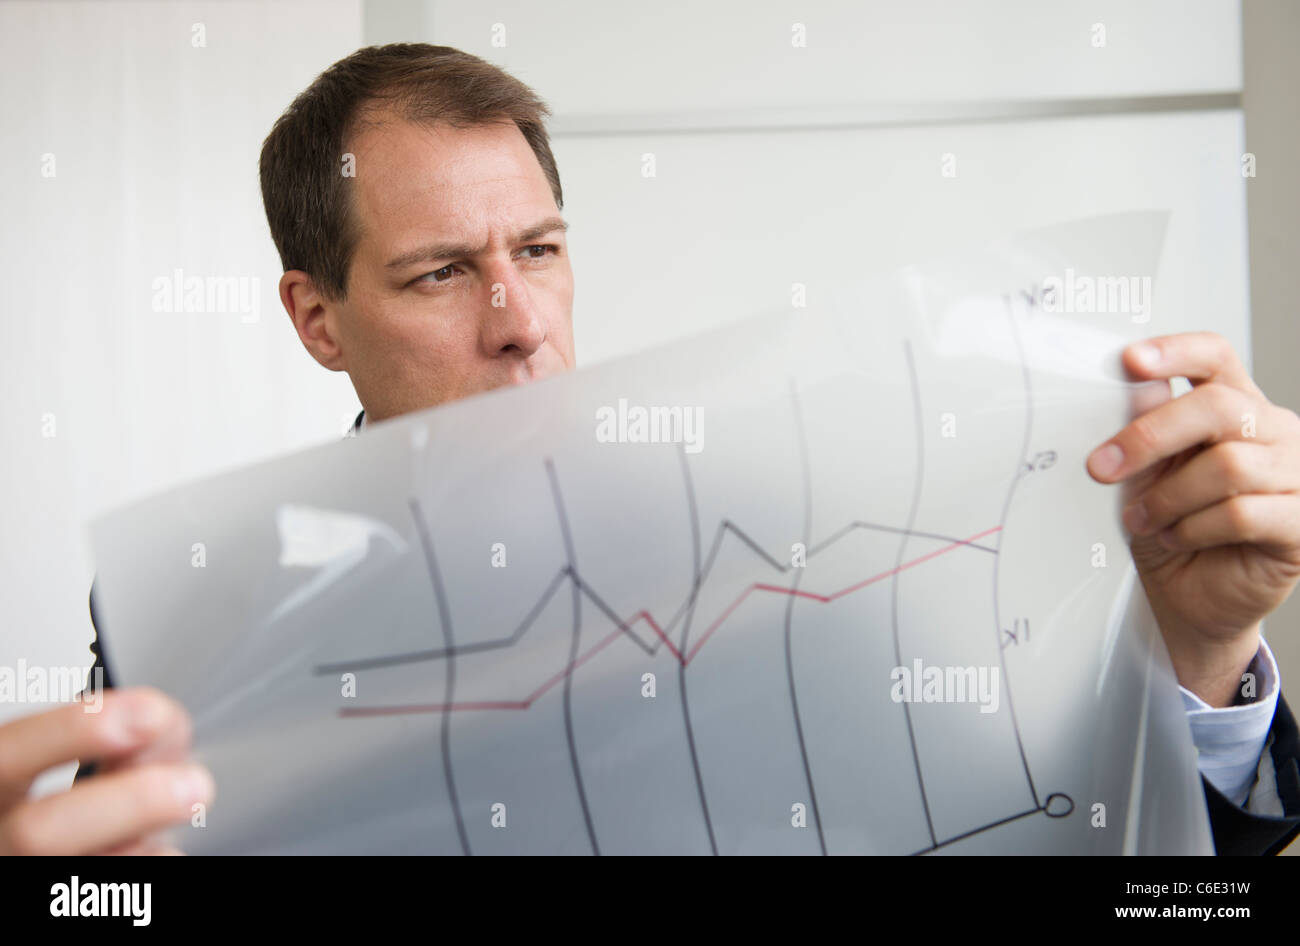 USA, New Jersey, Jersey City, Businessman analyzing graphs Stock Photo